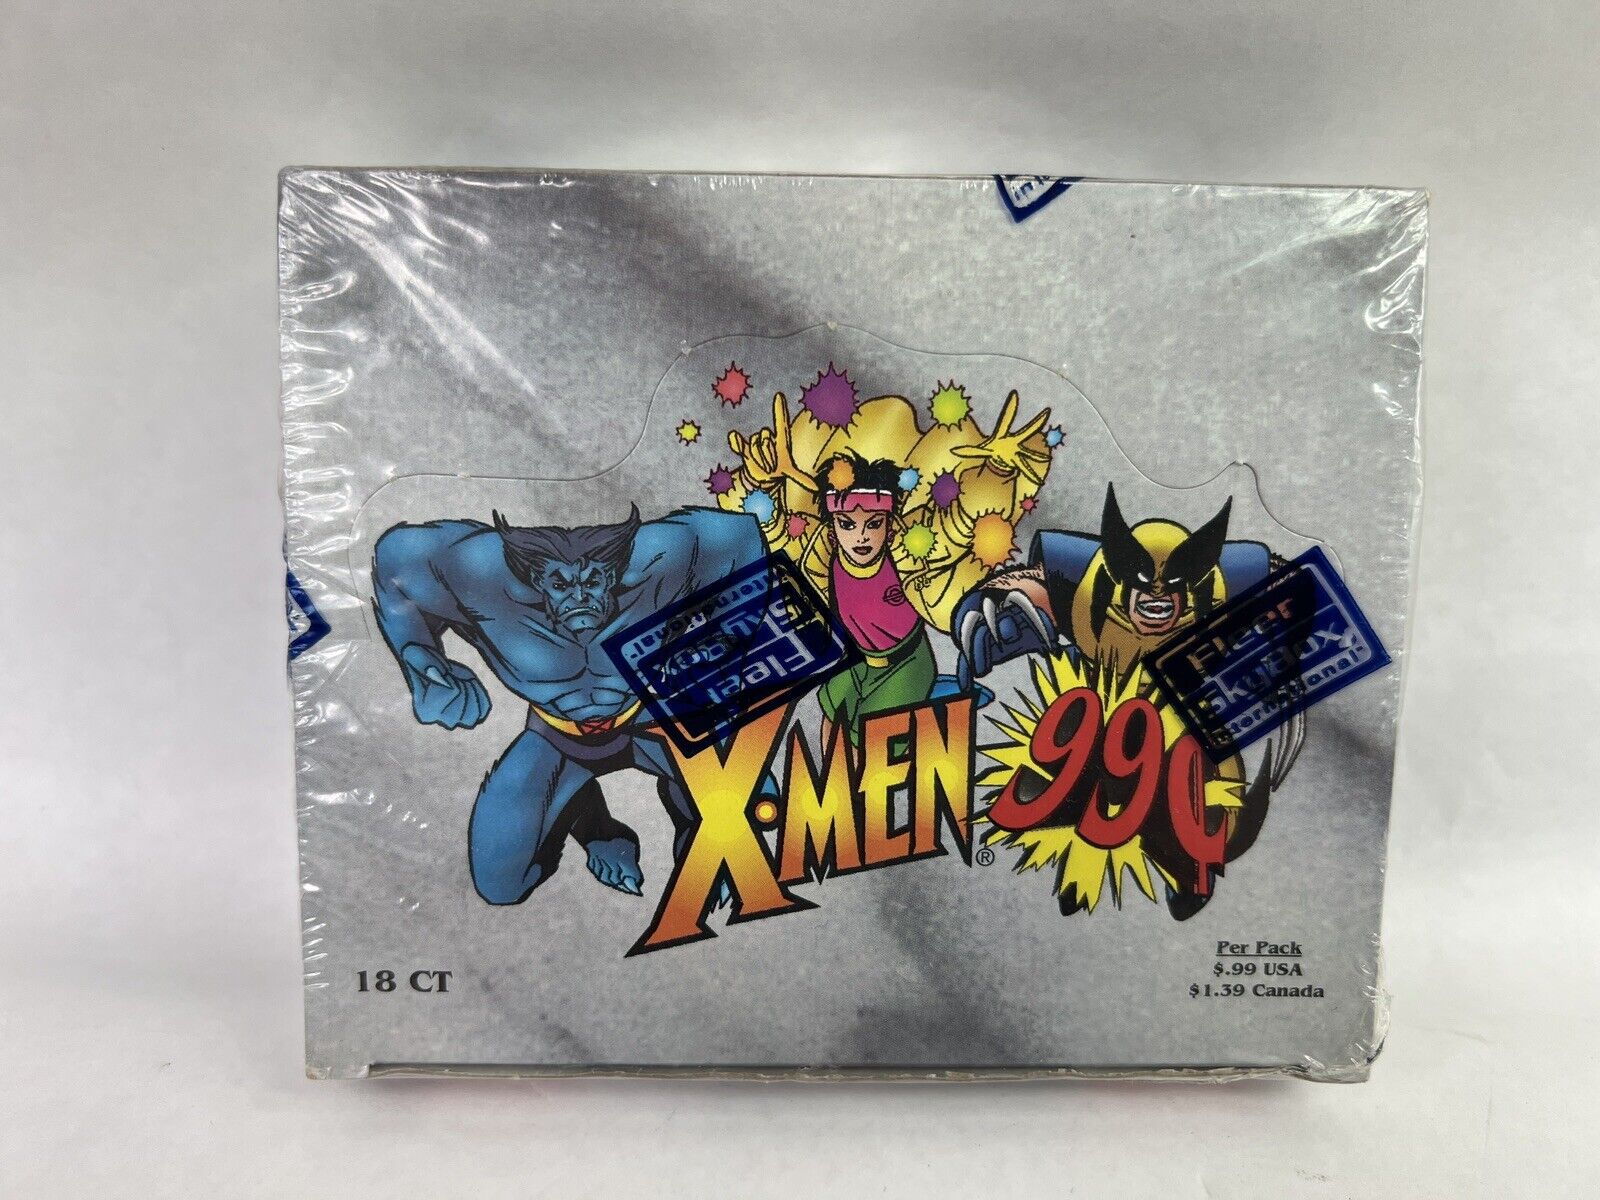 1997 Marvel X-Men Trading Card Sealed Box 18 Ct/Packs Fleer SkyBox Unopened RARE